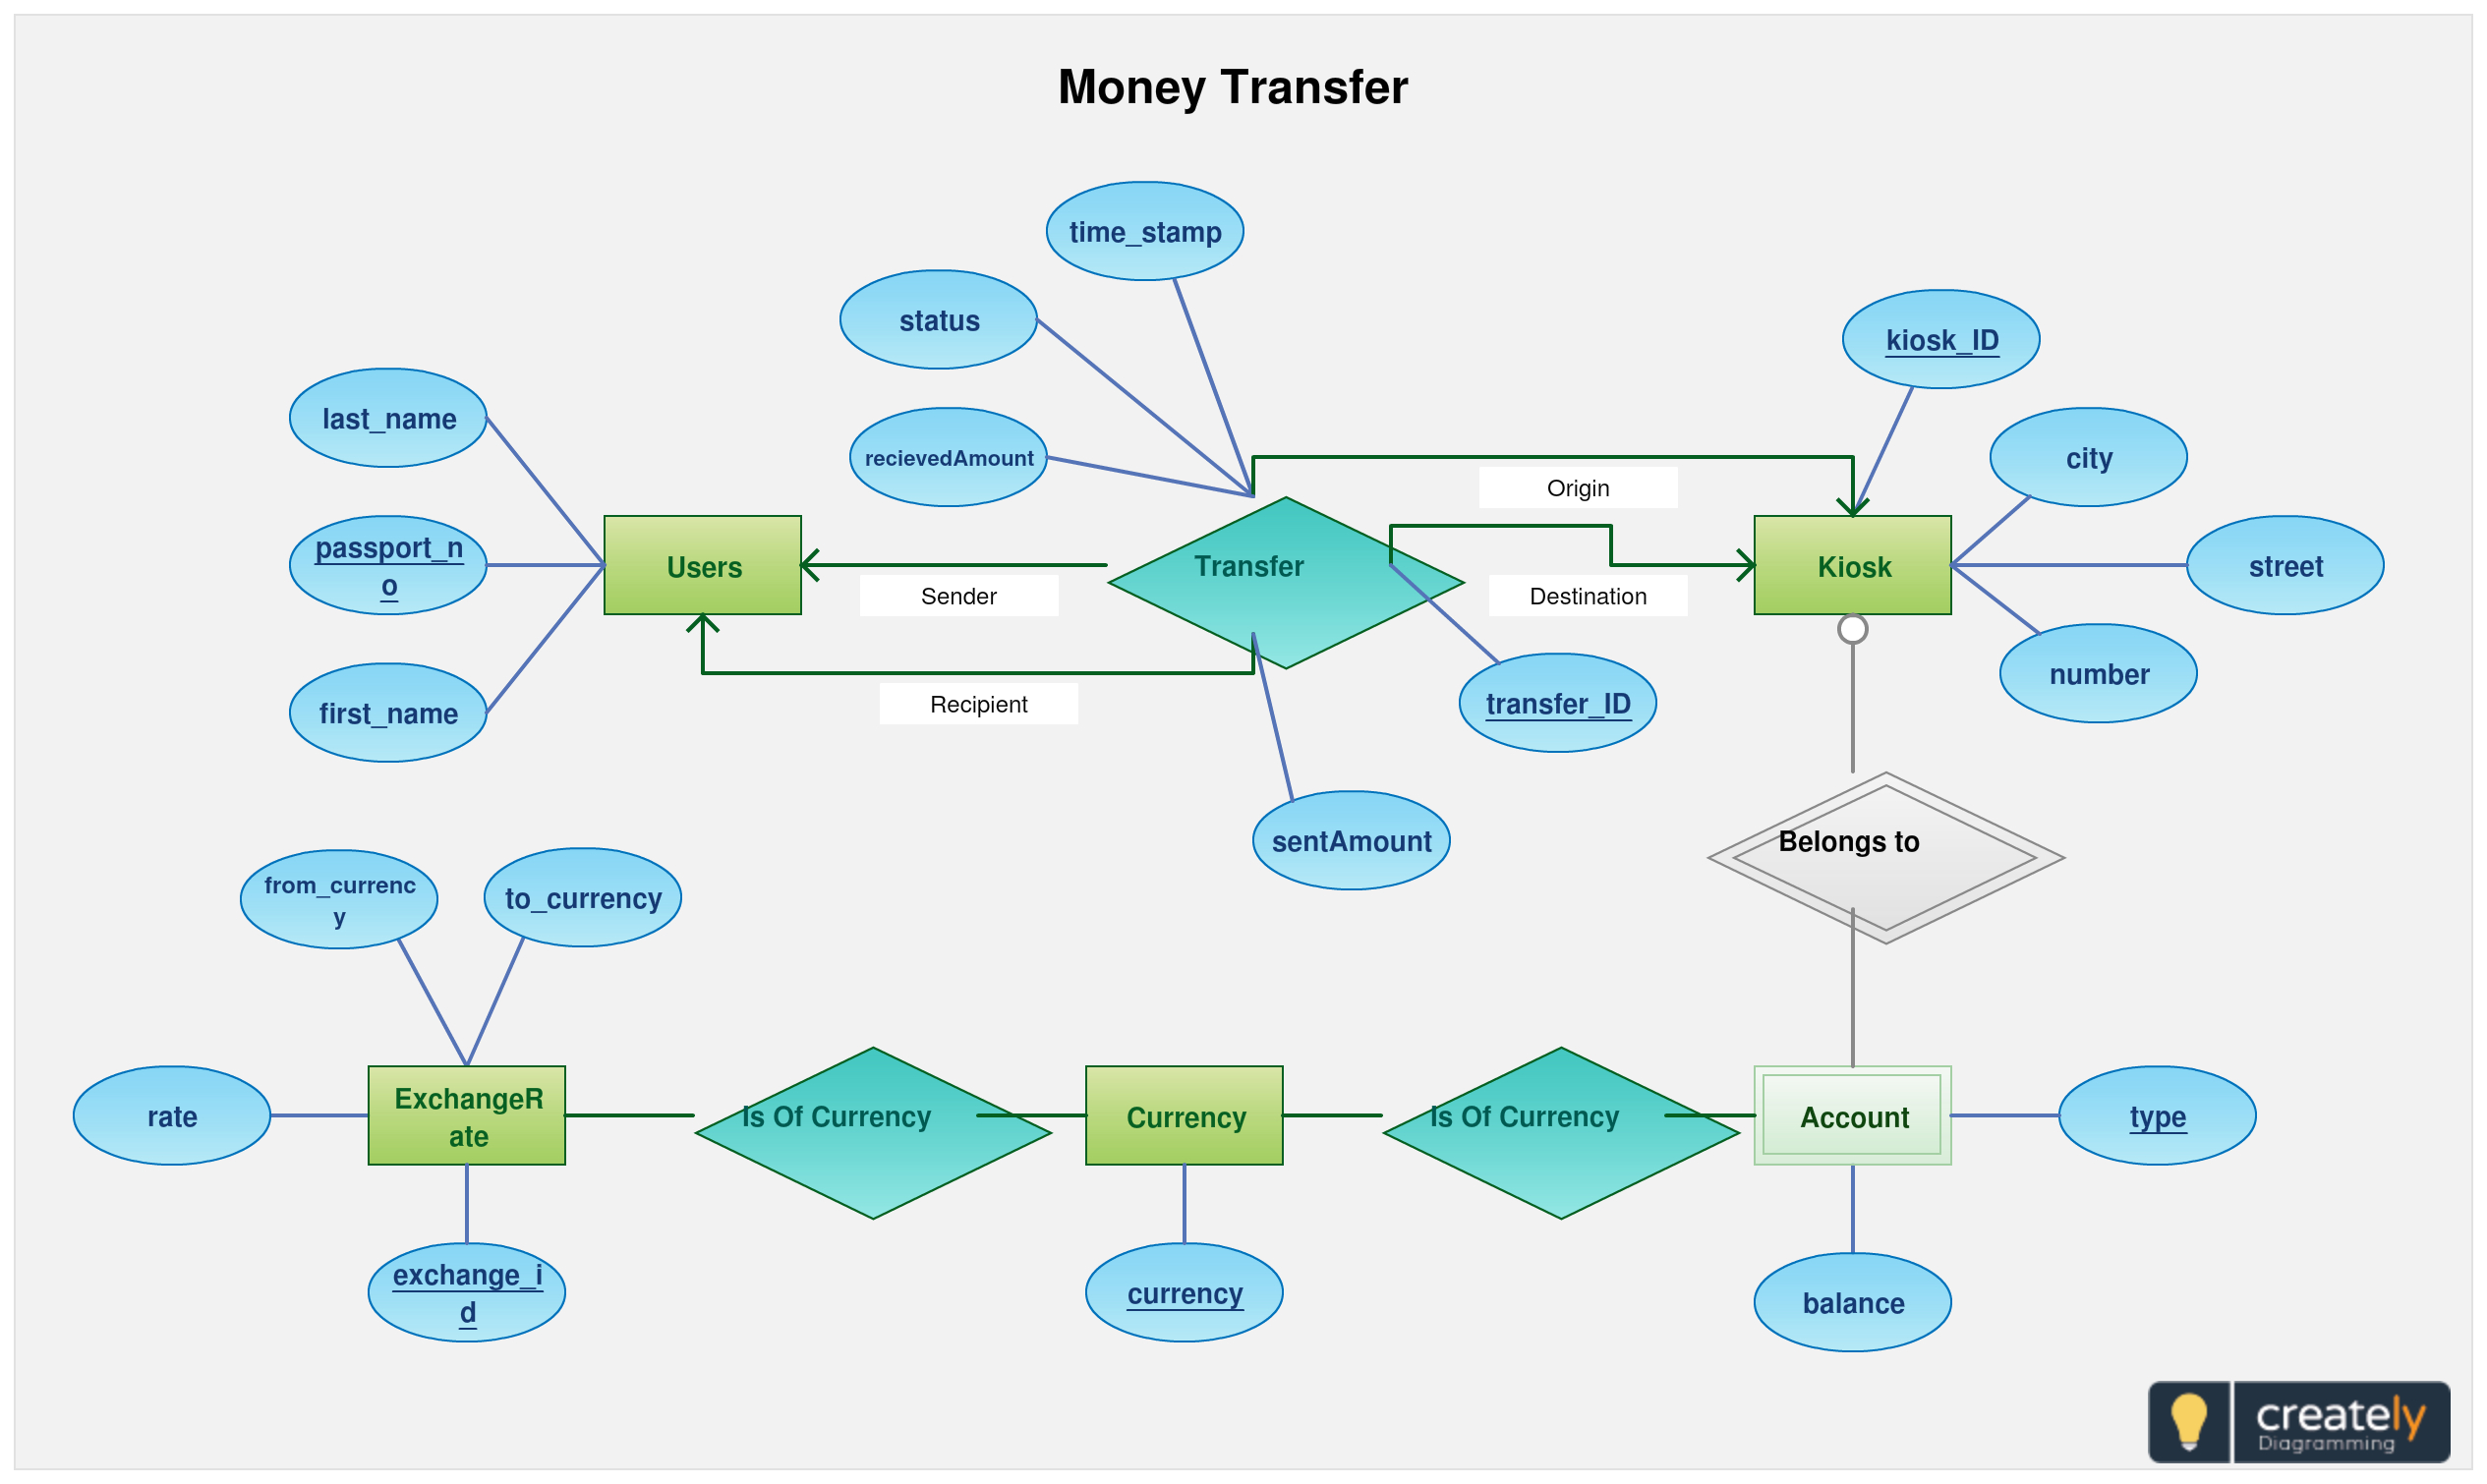 Entity Relationship Diagram Of Fund Transfer - Use This regarding Create Erd Diagram Online